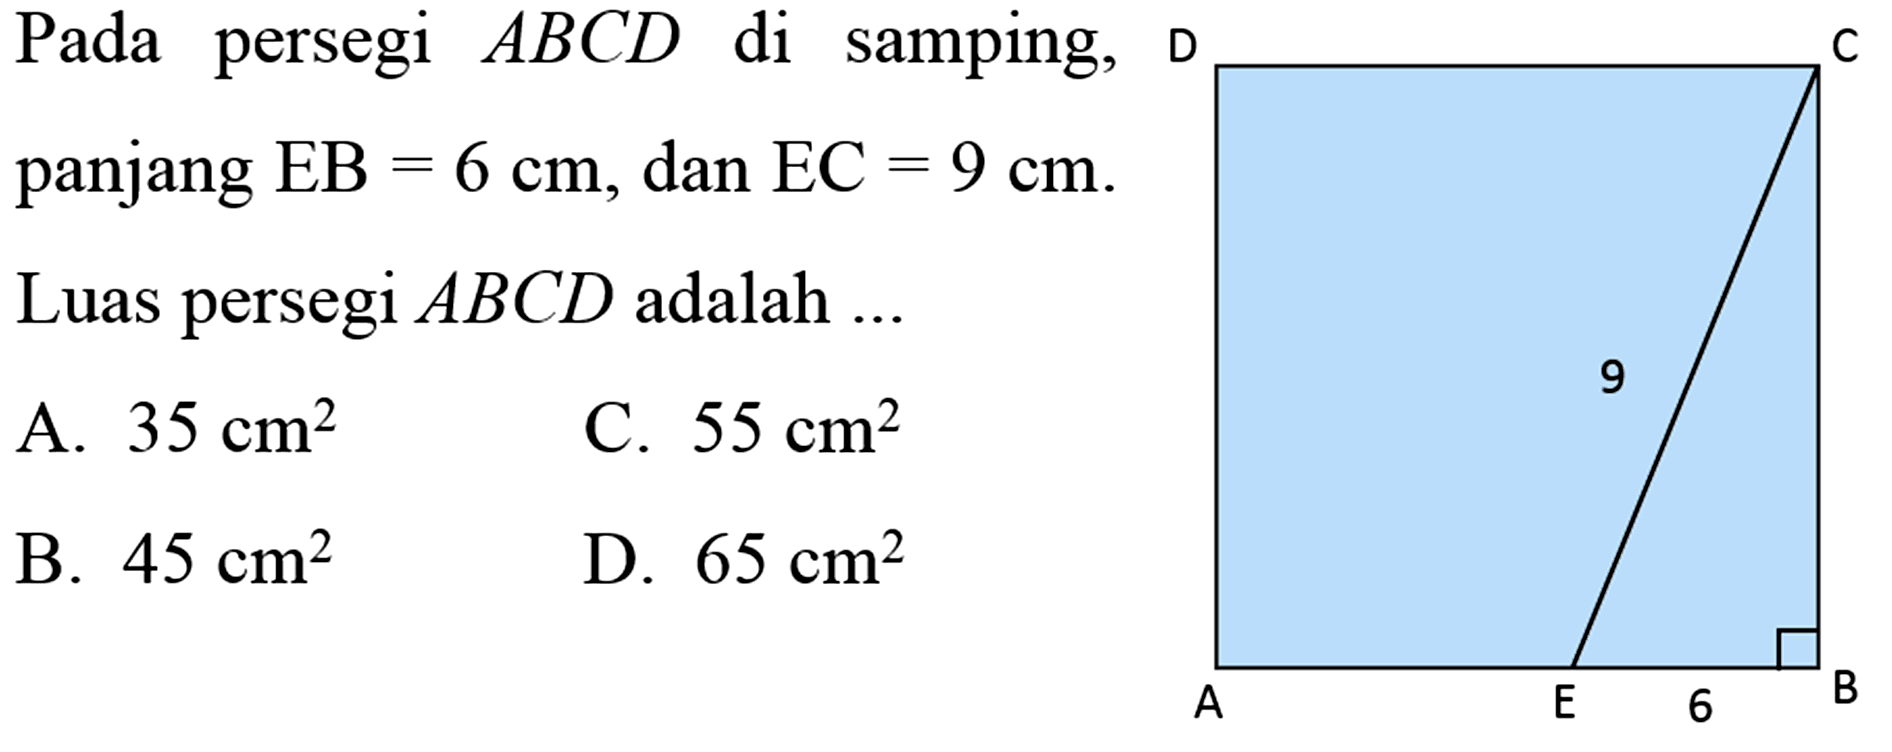 Pada persegi  ABCD  di samping,panjang  EB=6 cm, dan  EC=9 cm .Luas persegi  ABCD  adalah  ... 